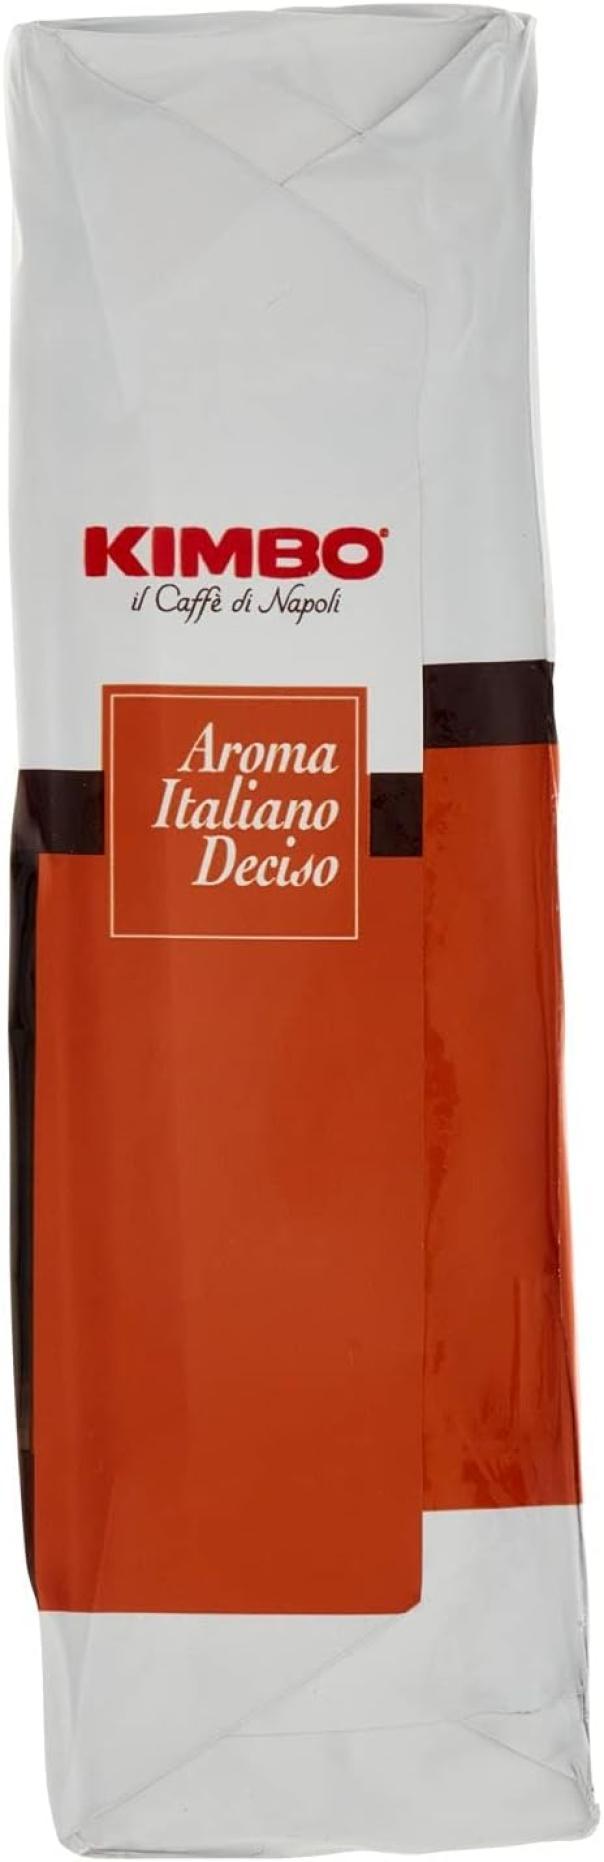 caffu00e8-aroma-italiano-deciso-kimbo-4x250gr-4